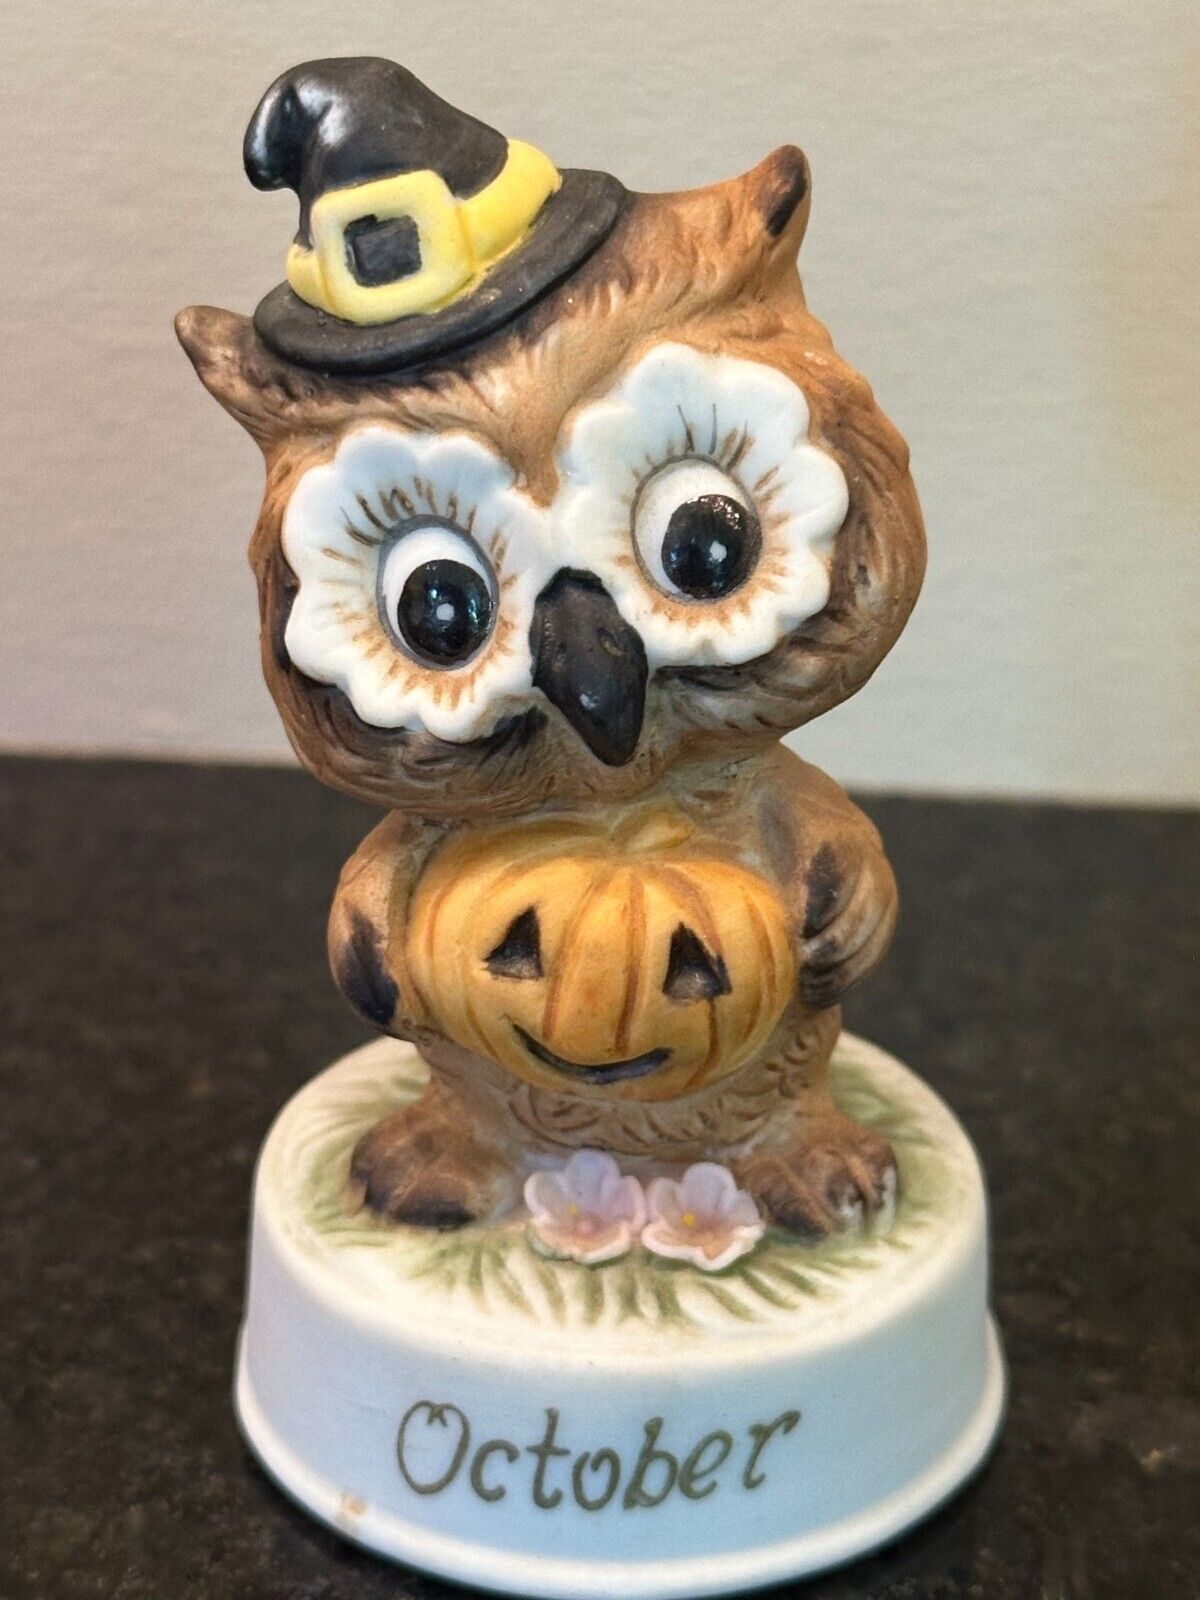 Napco Ceramic Owl Figurine October - Witch\'s Hat - Pumpkin - Vintage  3.5” Tall